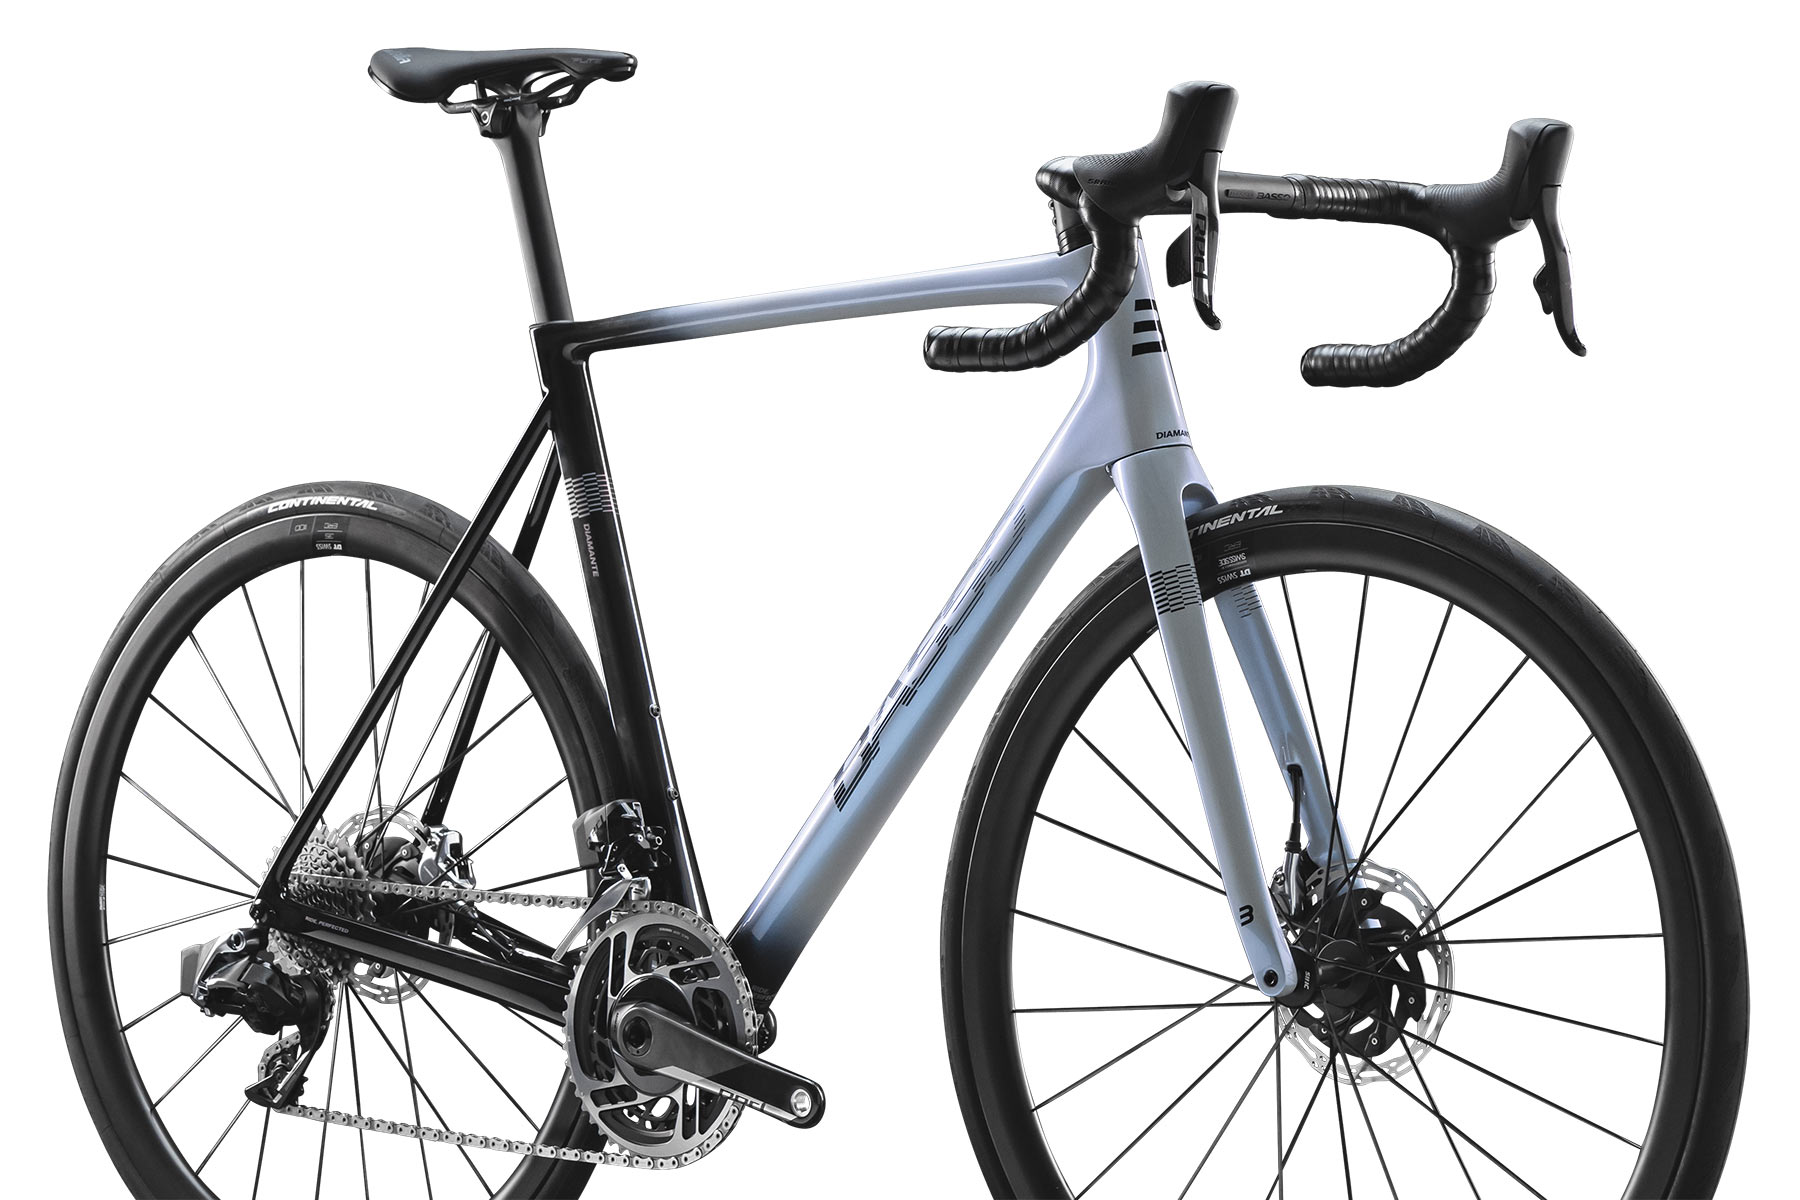 2022 new Basso Diamante lightweight modern classic Italian carbon road bike, ngled